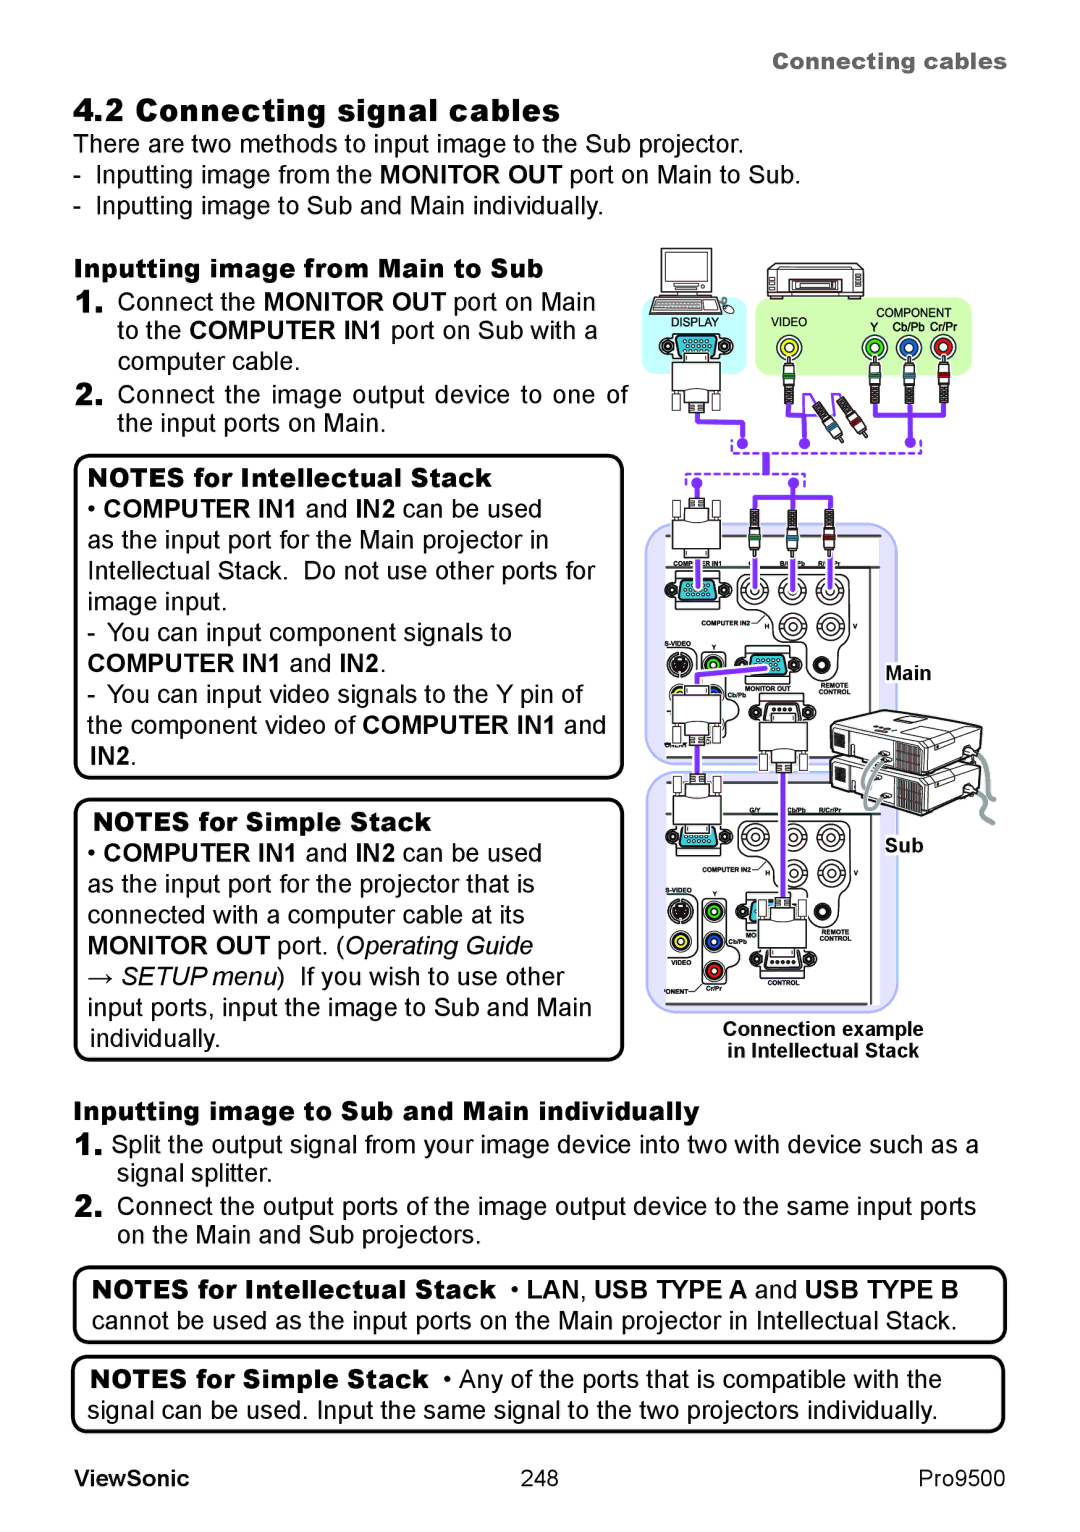 ViewSonic VS13835 Connecting signal cables, Inputting image from Main to Sub, Inputting image to Sub and Main individually 